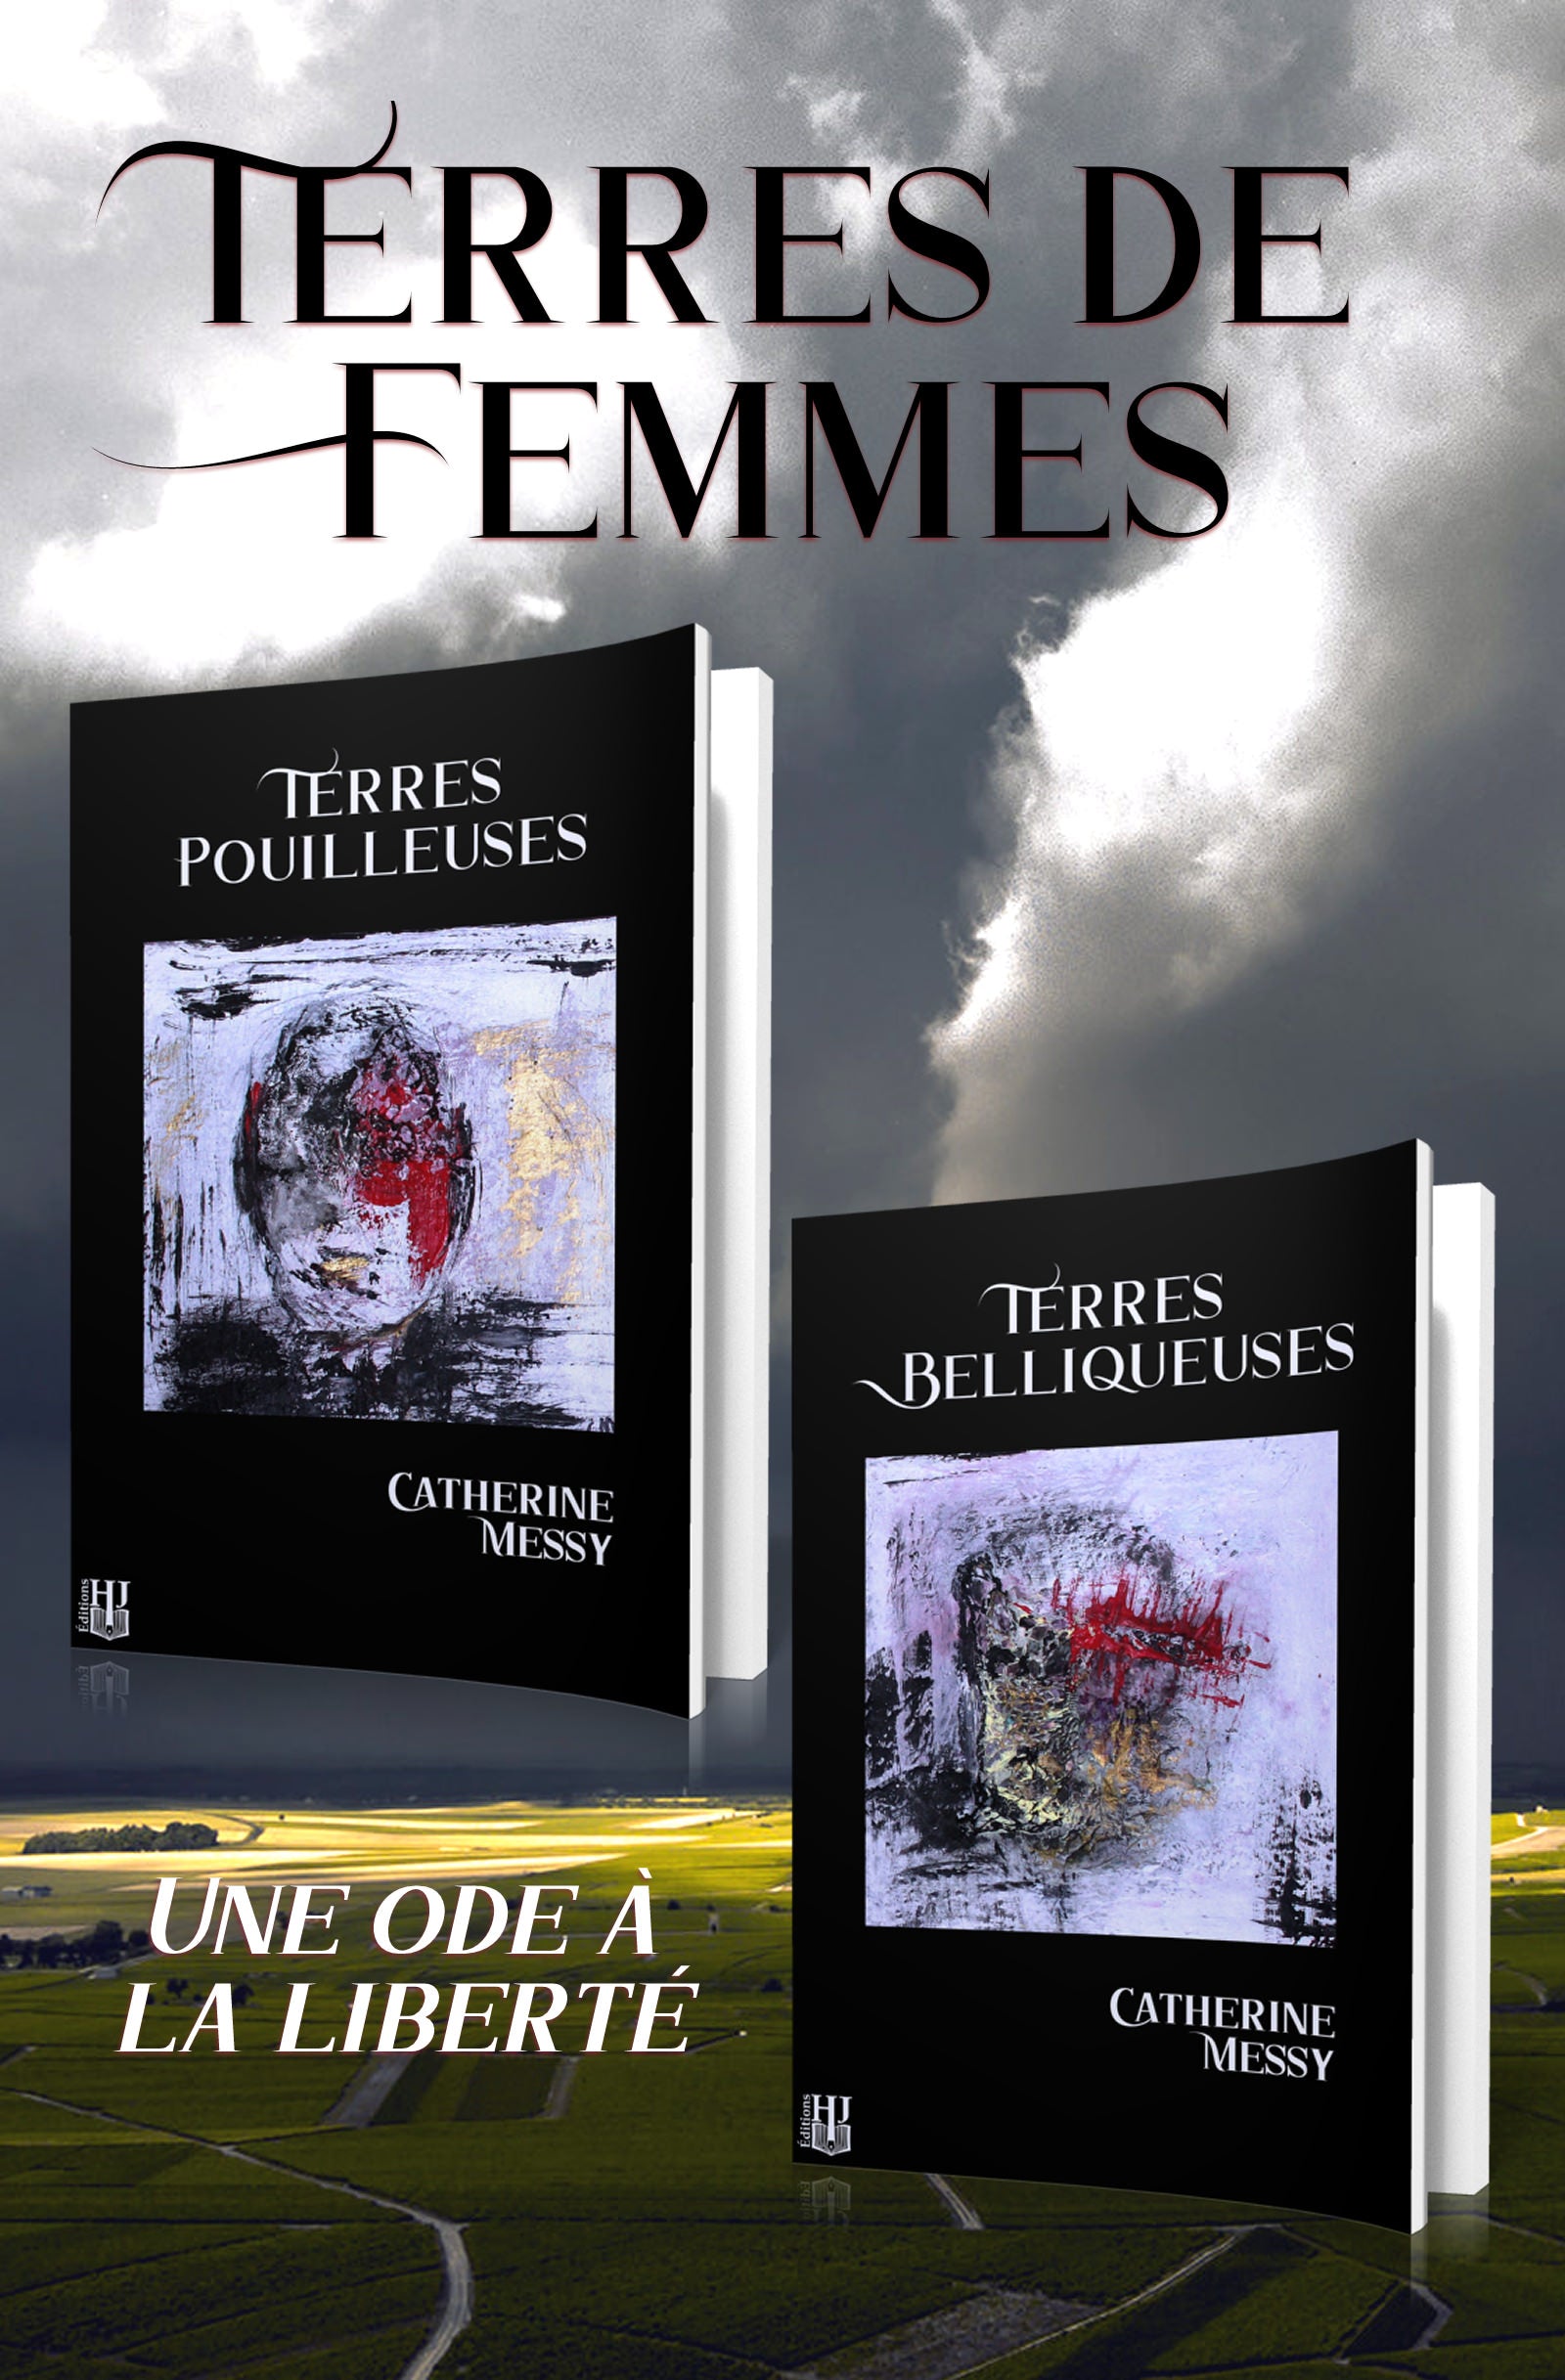 Terres de femmes : Terres pouilleuses & Terres belliqueuses (bundle 2 livres) (Catherine Messy)